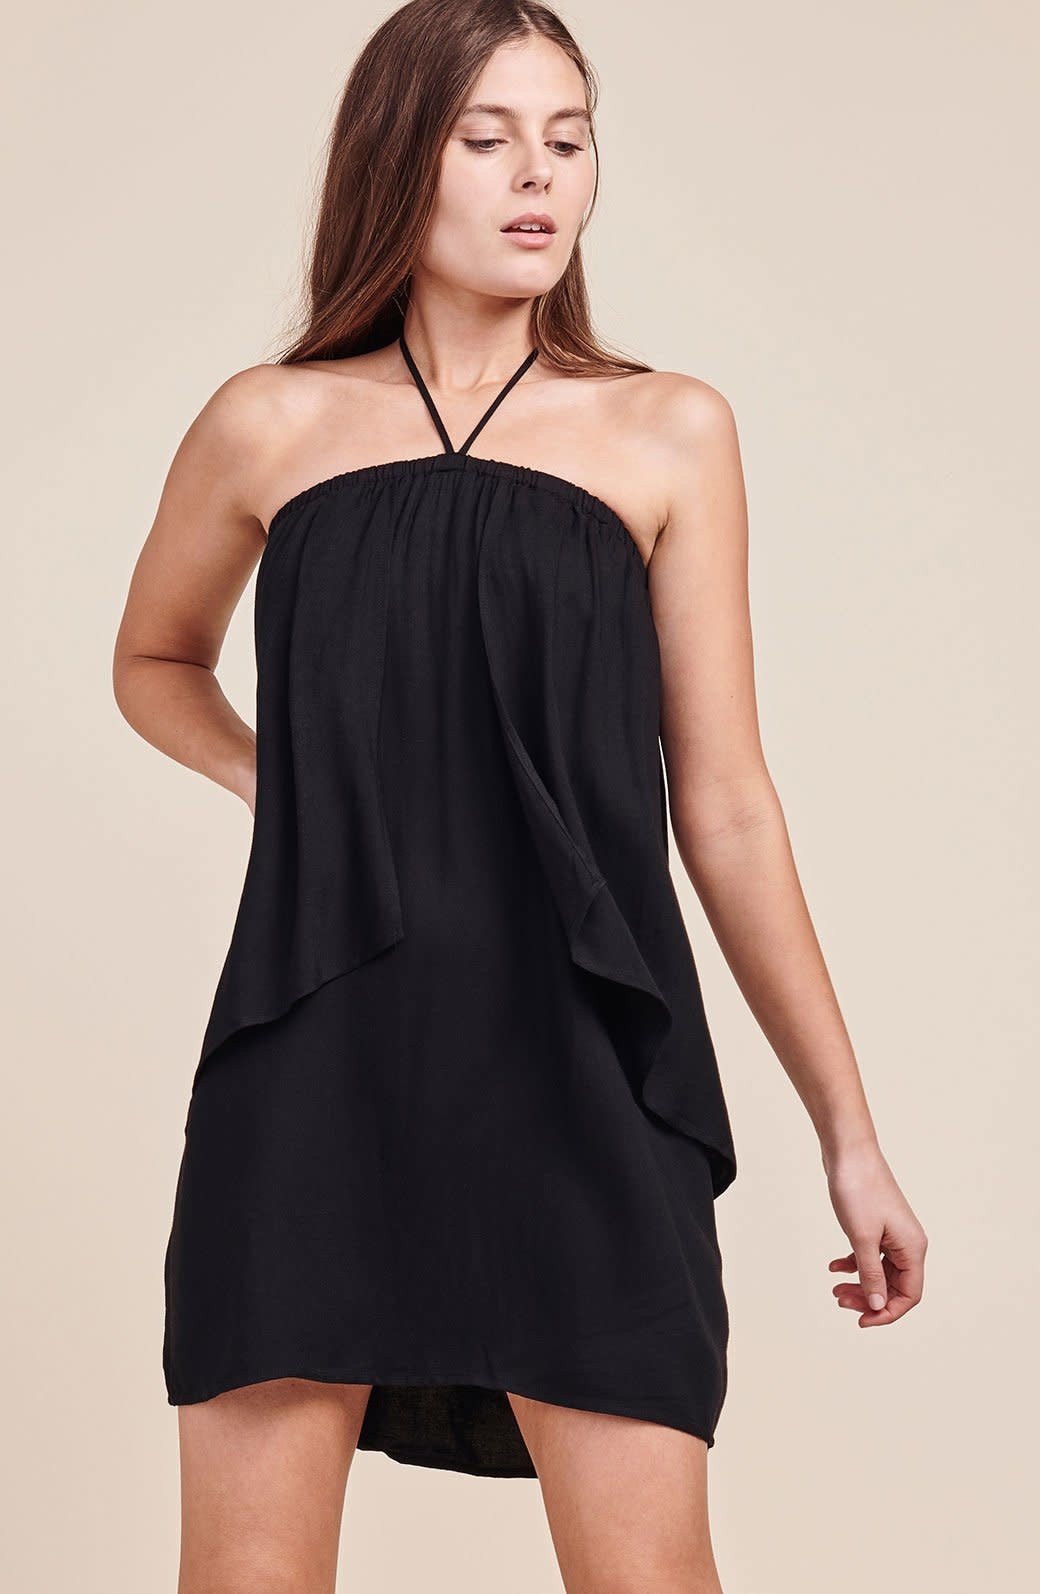 Black Halter Dress - Pinktini